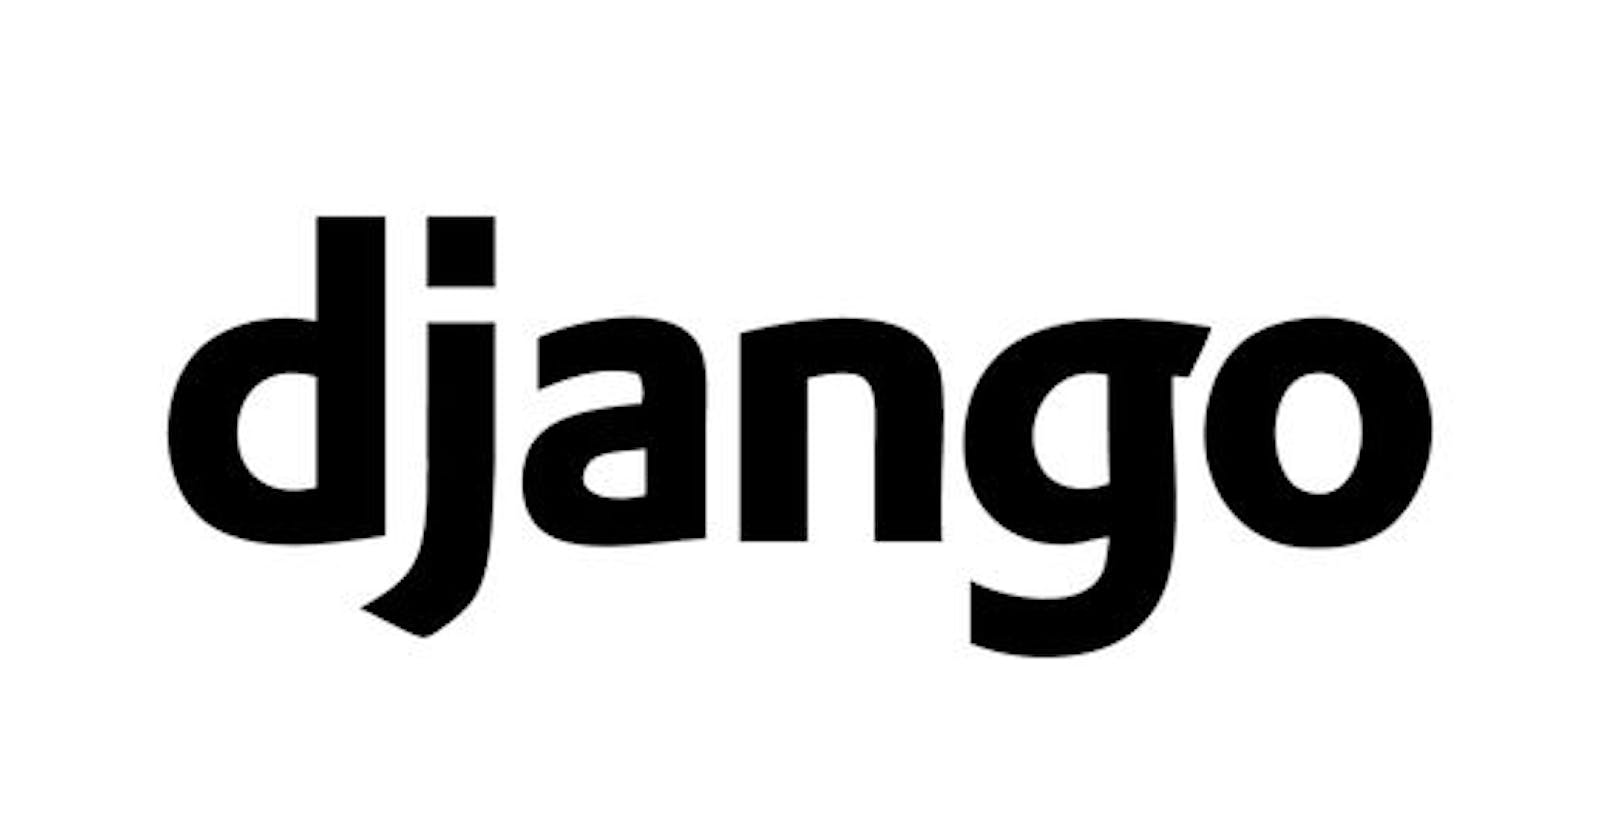 Django for Web Development